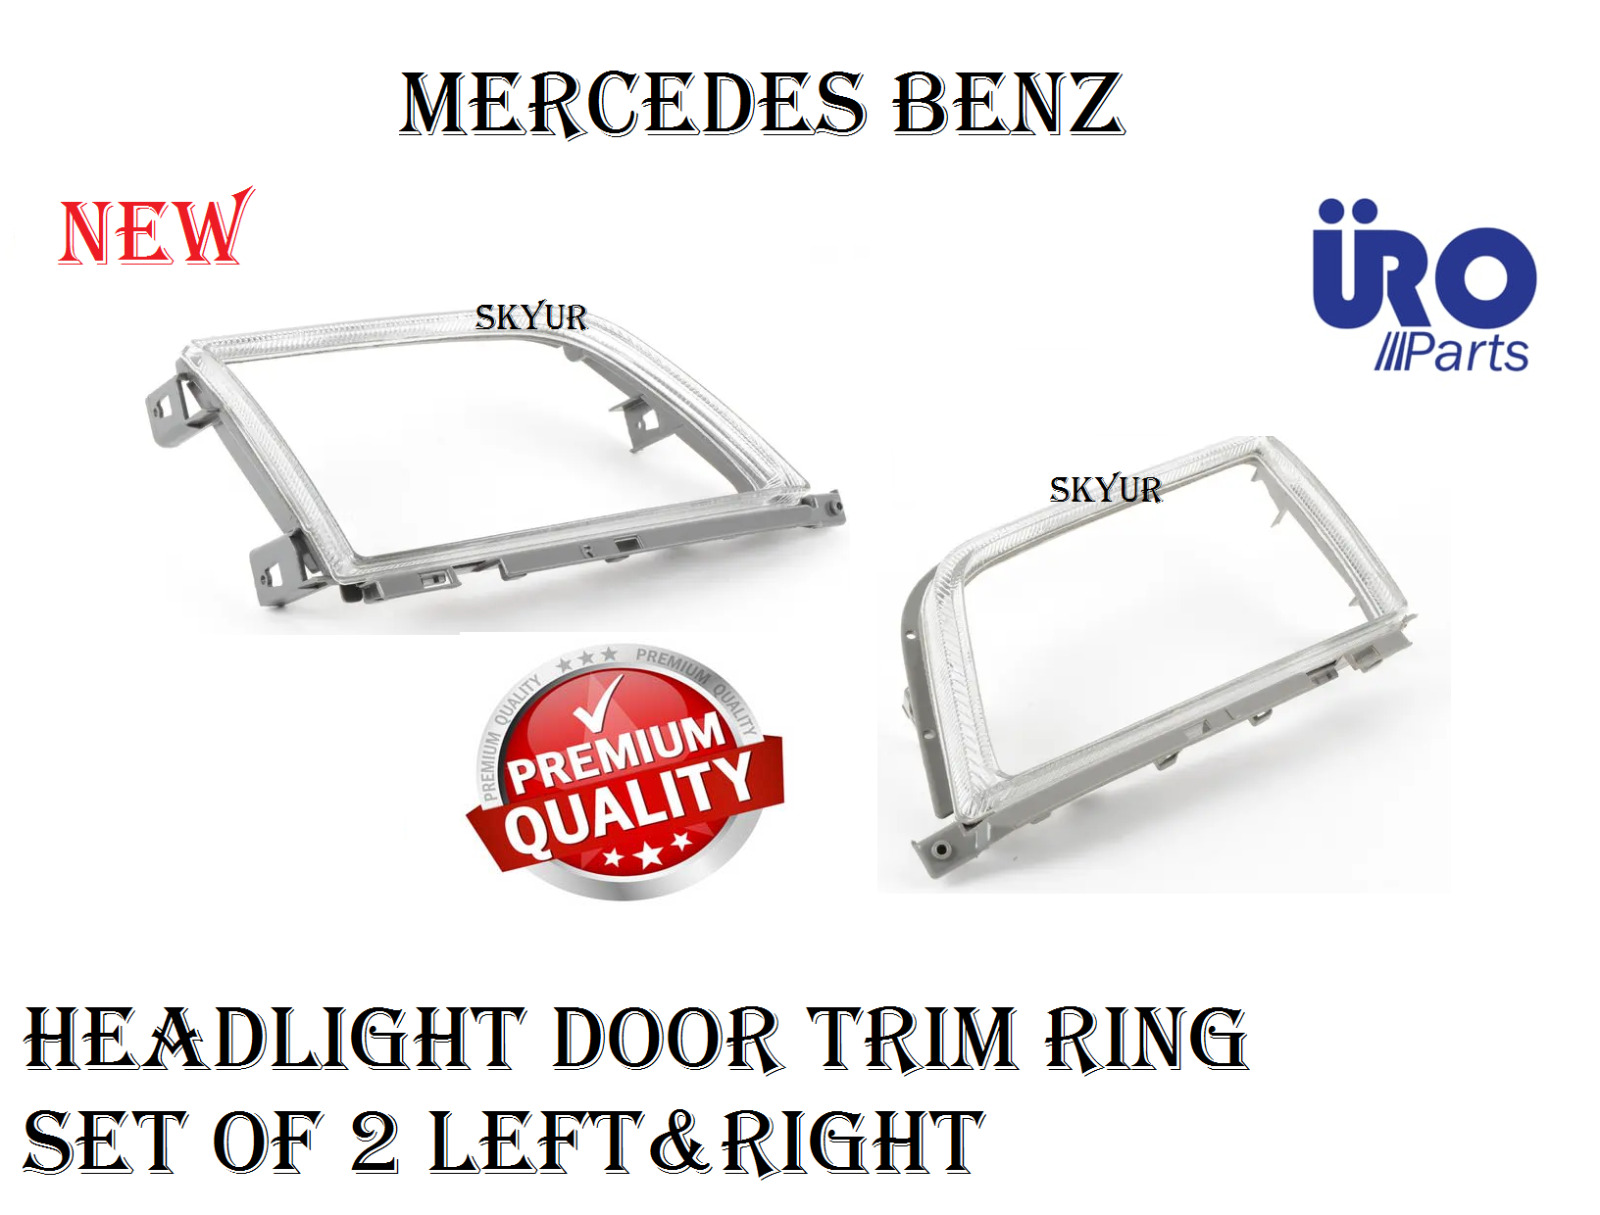 Headlight Door Trim Ring Set Of 2 Left & Right For Mercedes W129 Sl320 SL500 URO